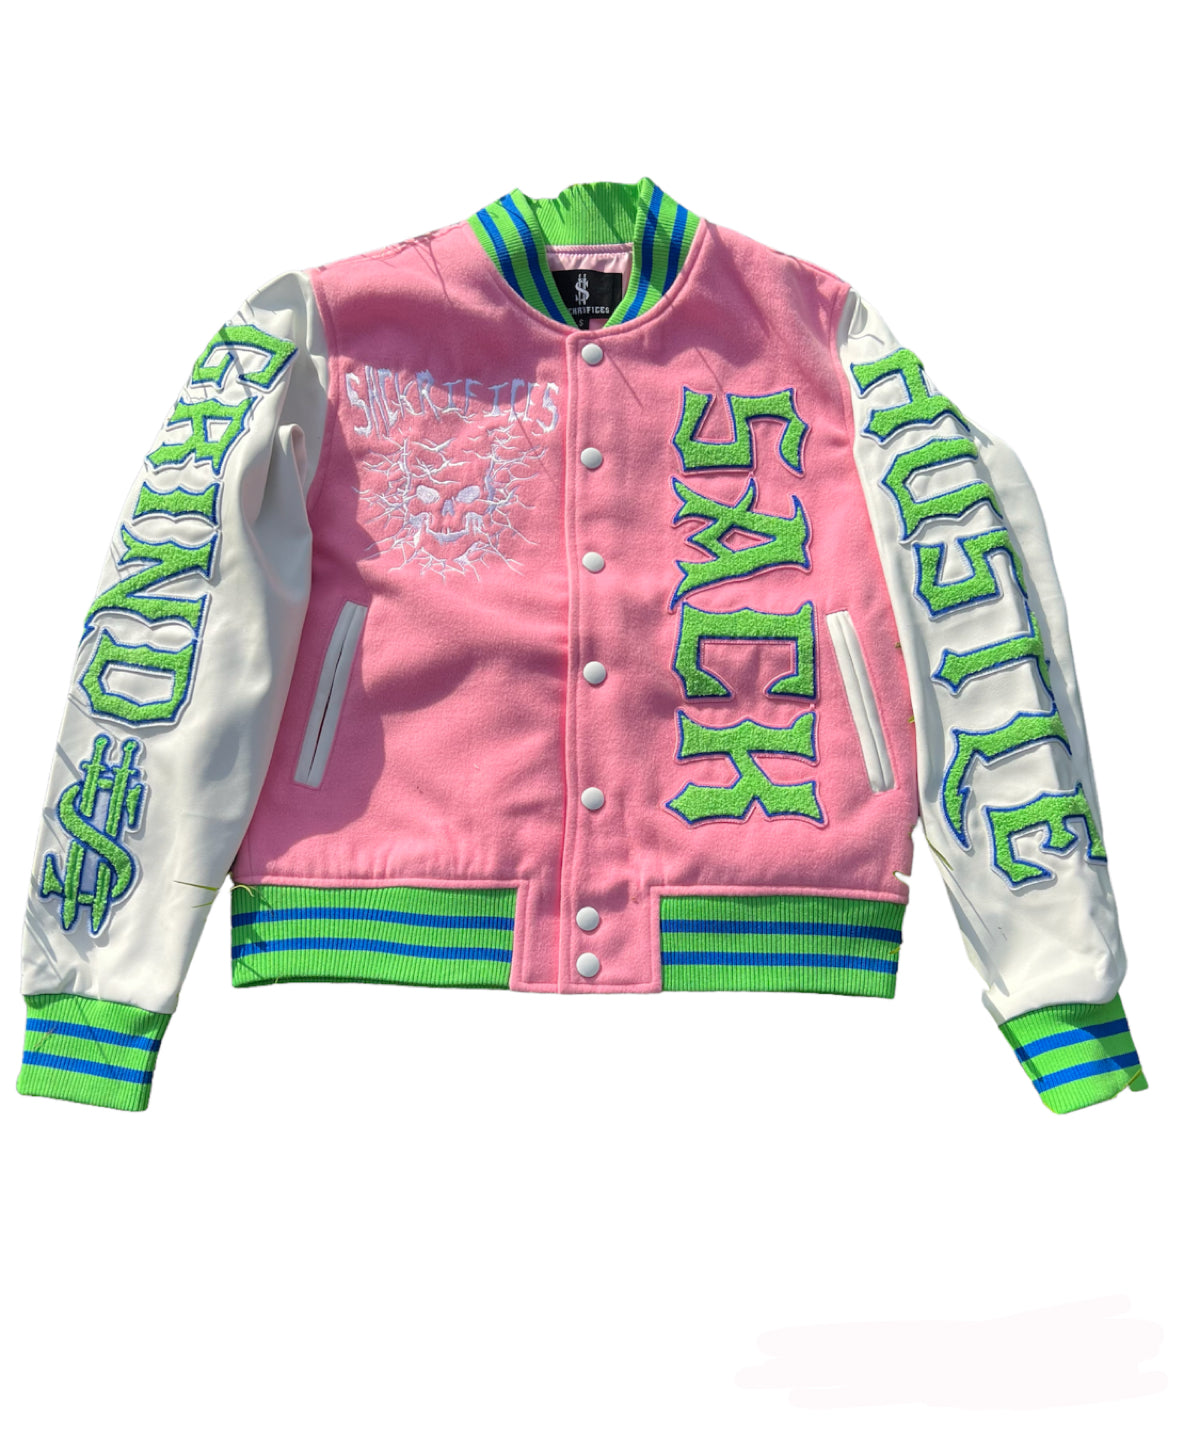 Championship Letterman Jacket - pink/green/blue